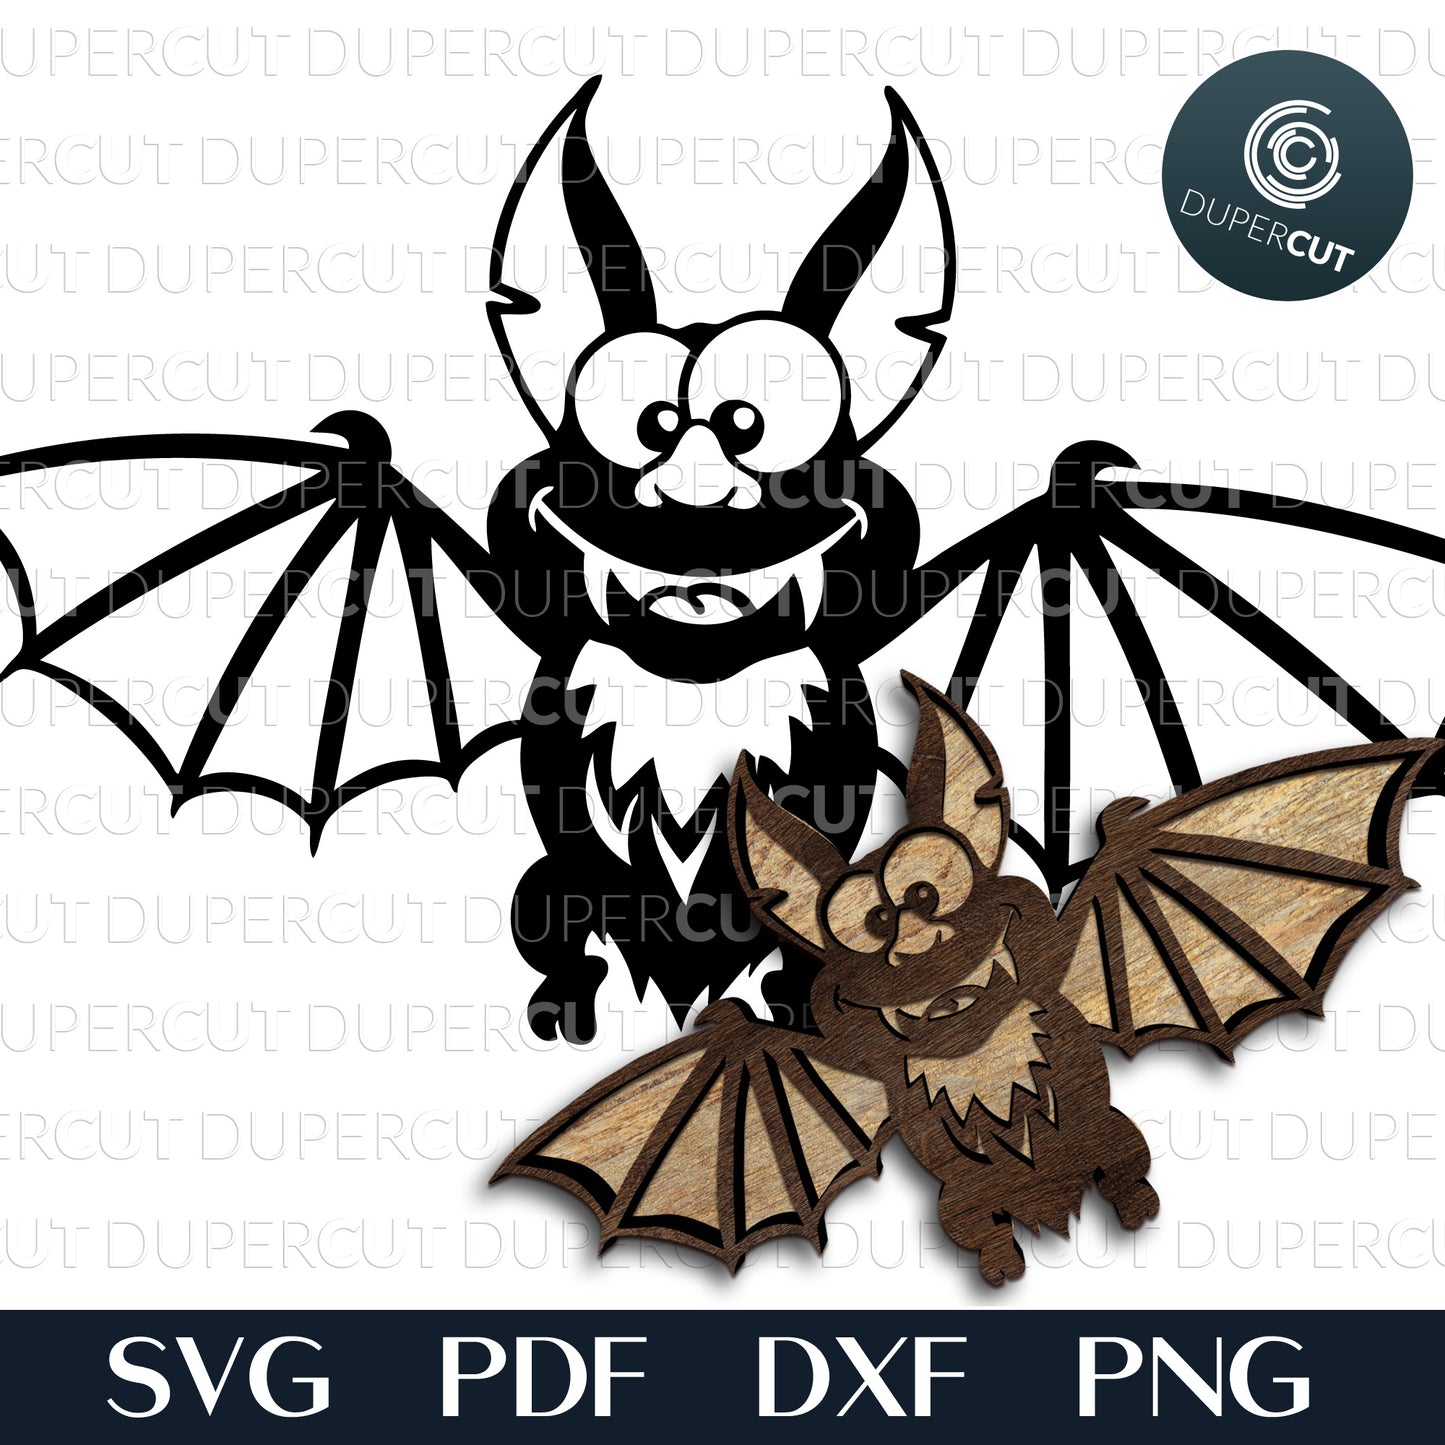 Silly cartoon bat Halloween decoration - SVG PDF DXF layered cutting files for laser machines, Glowrorge, Cricut, Silhouette and CNC plasma